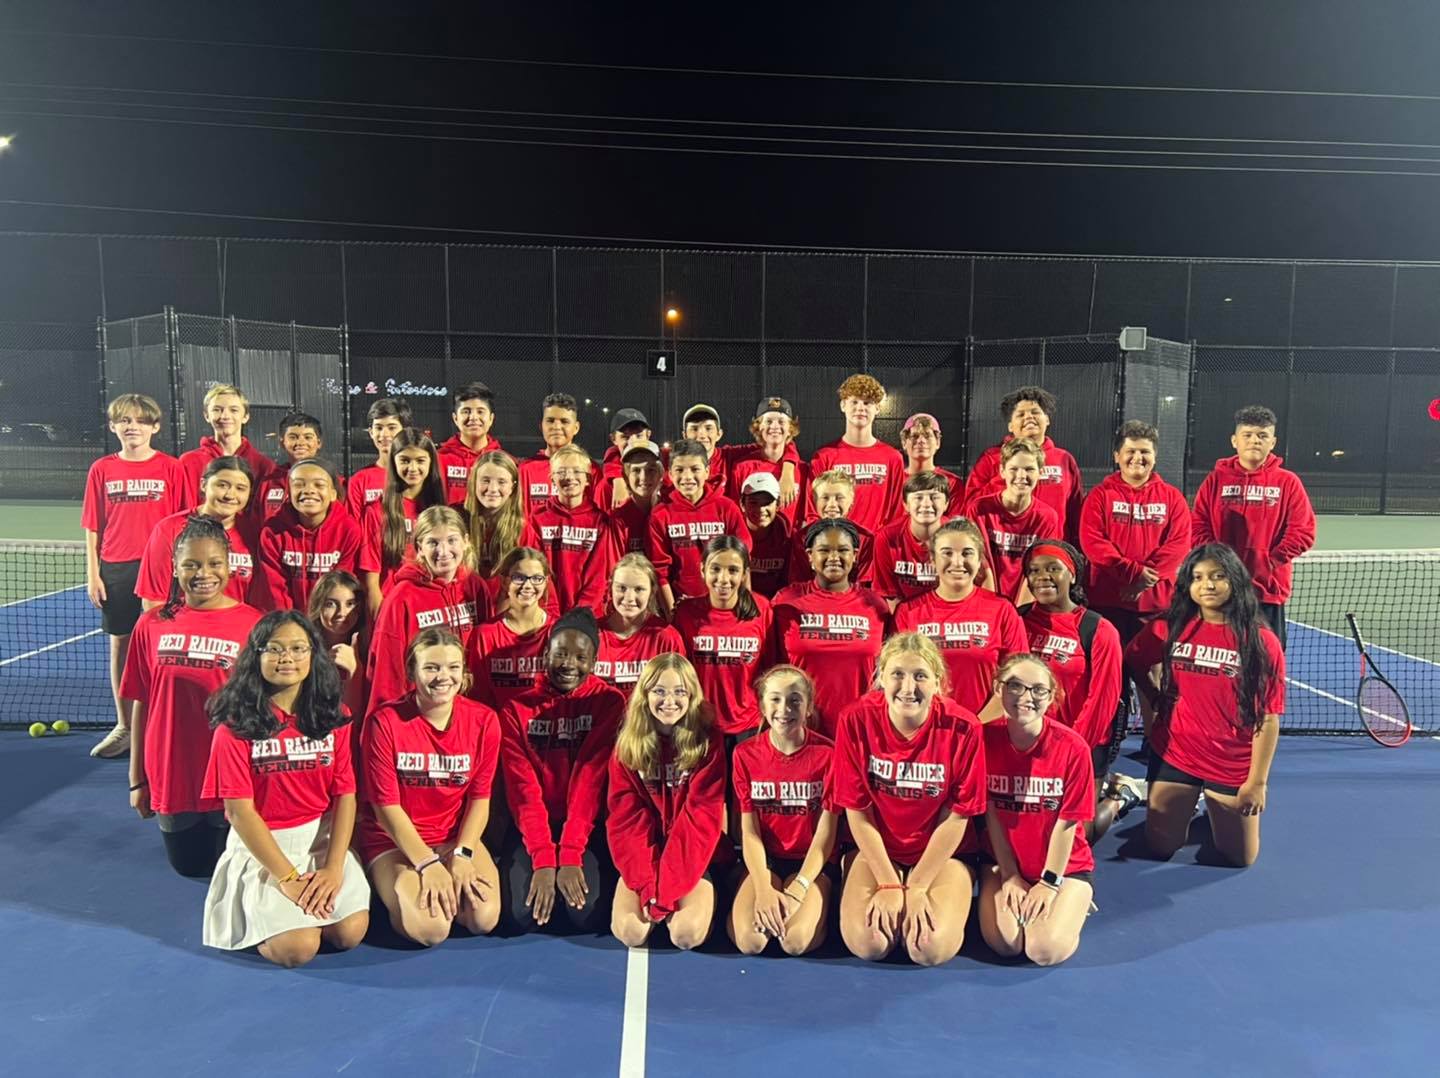 Caldwell students in high school tennis